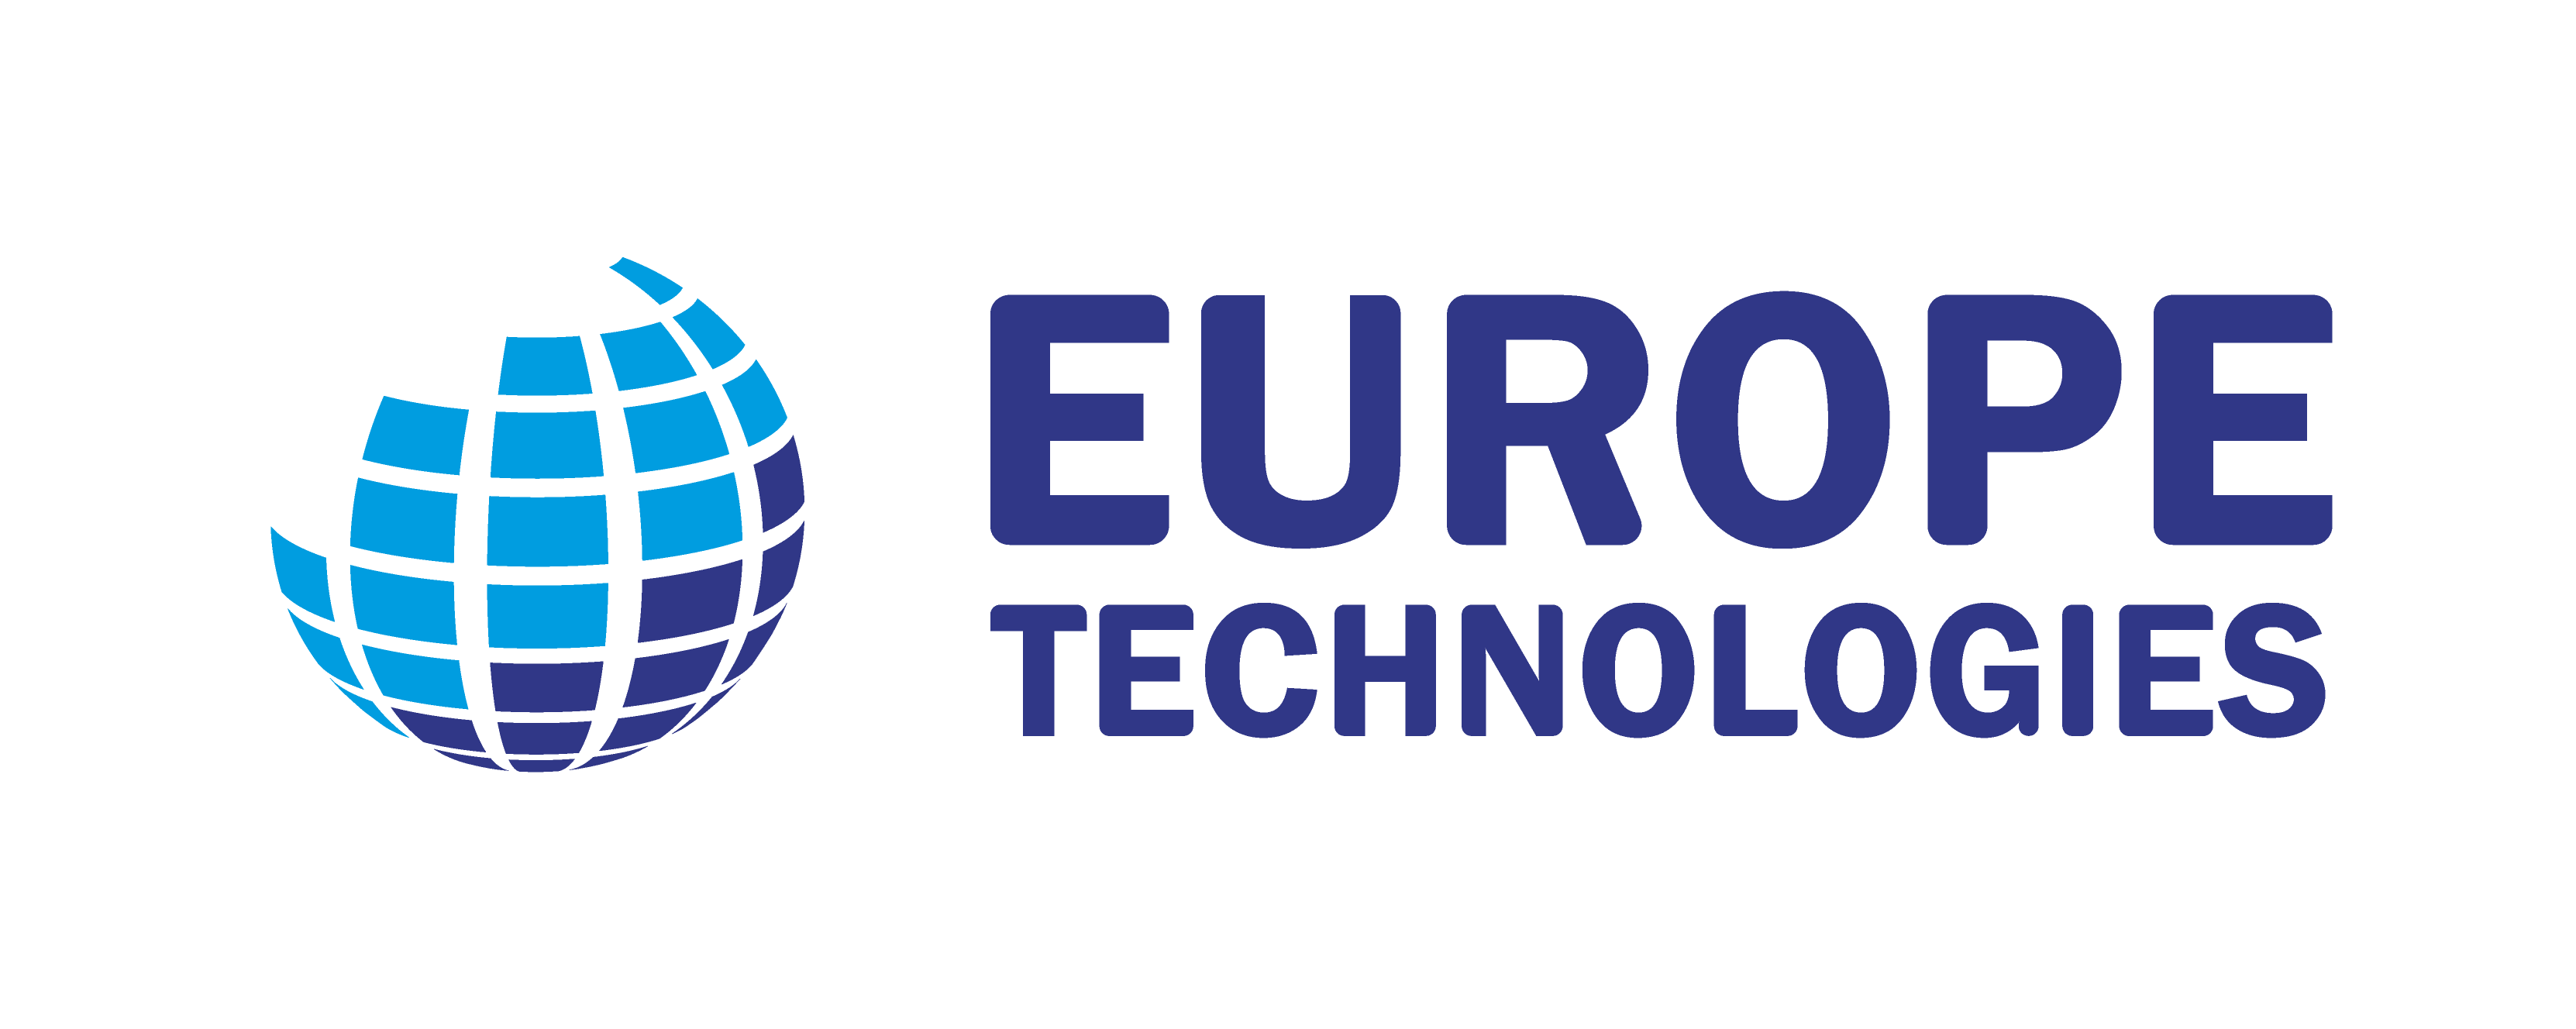 Europe Technologies Logo